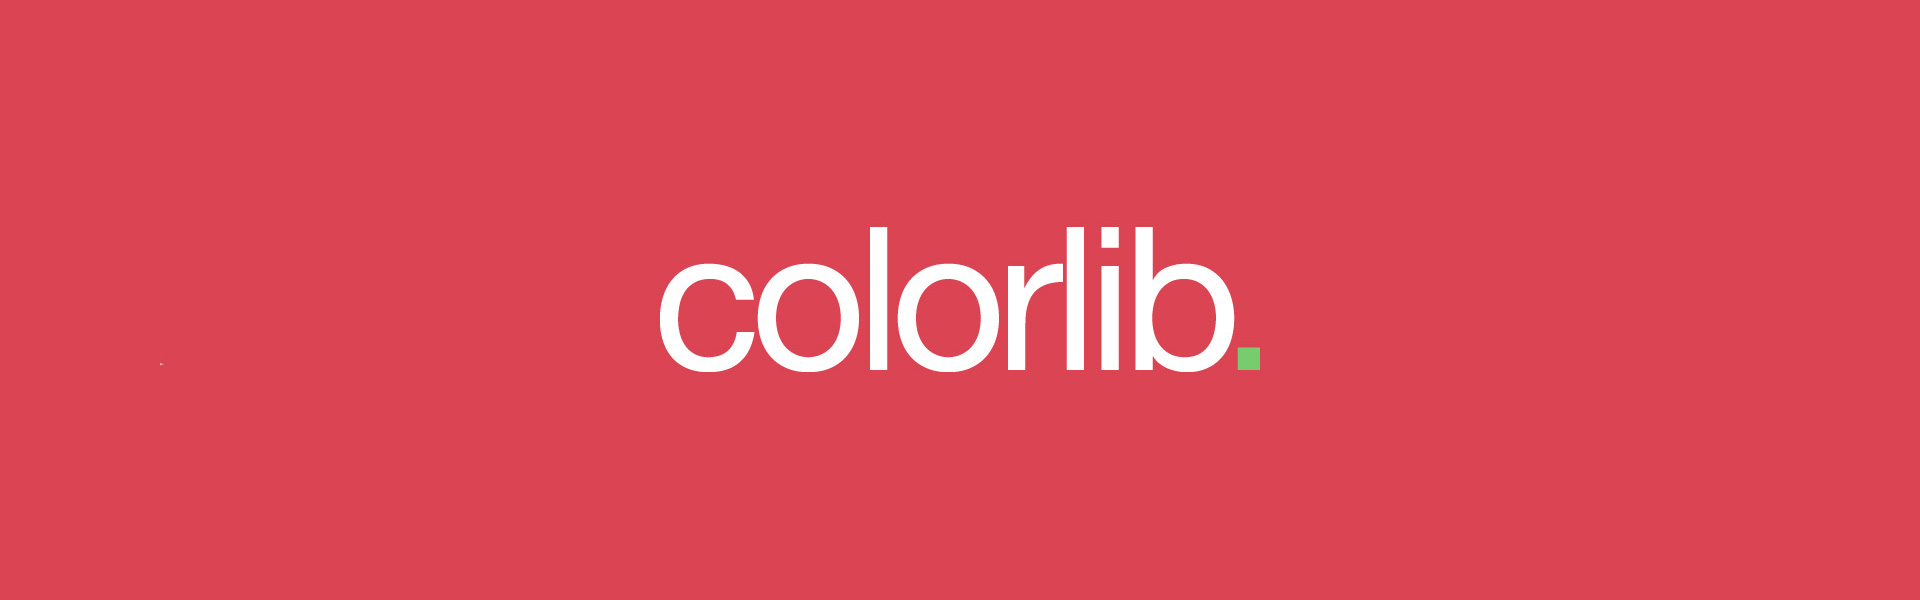 colorlib-logo-slider